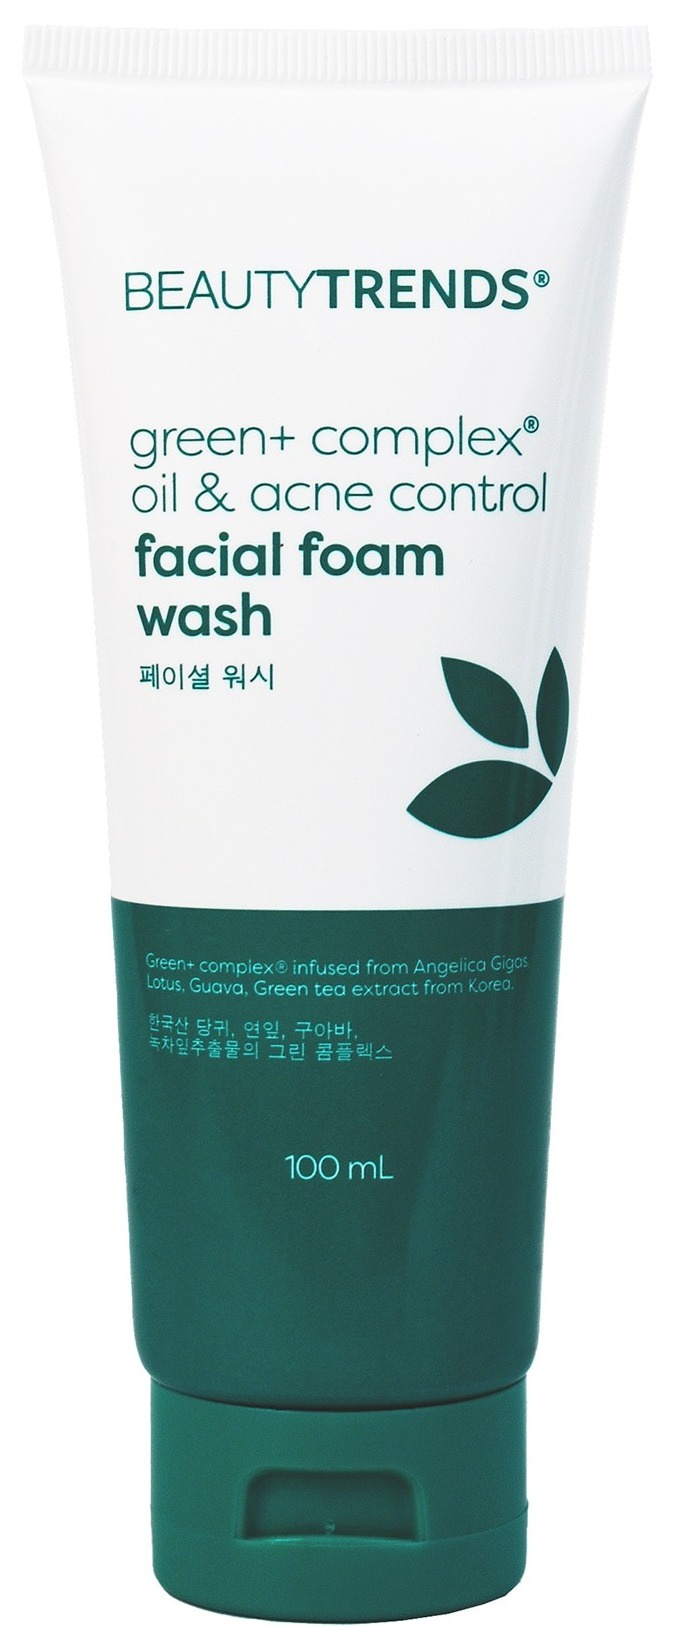 BEAUTYTRENDS Green+ Complex Oil & Acne Control Facial Foam Wash